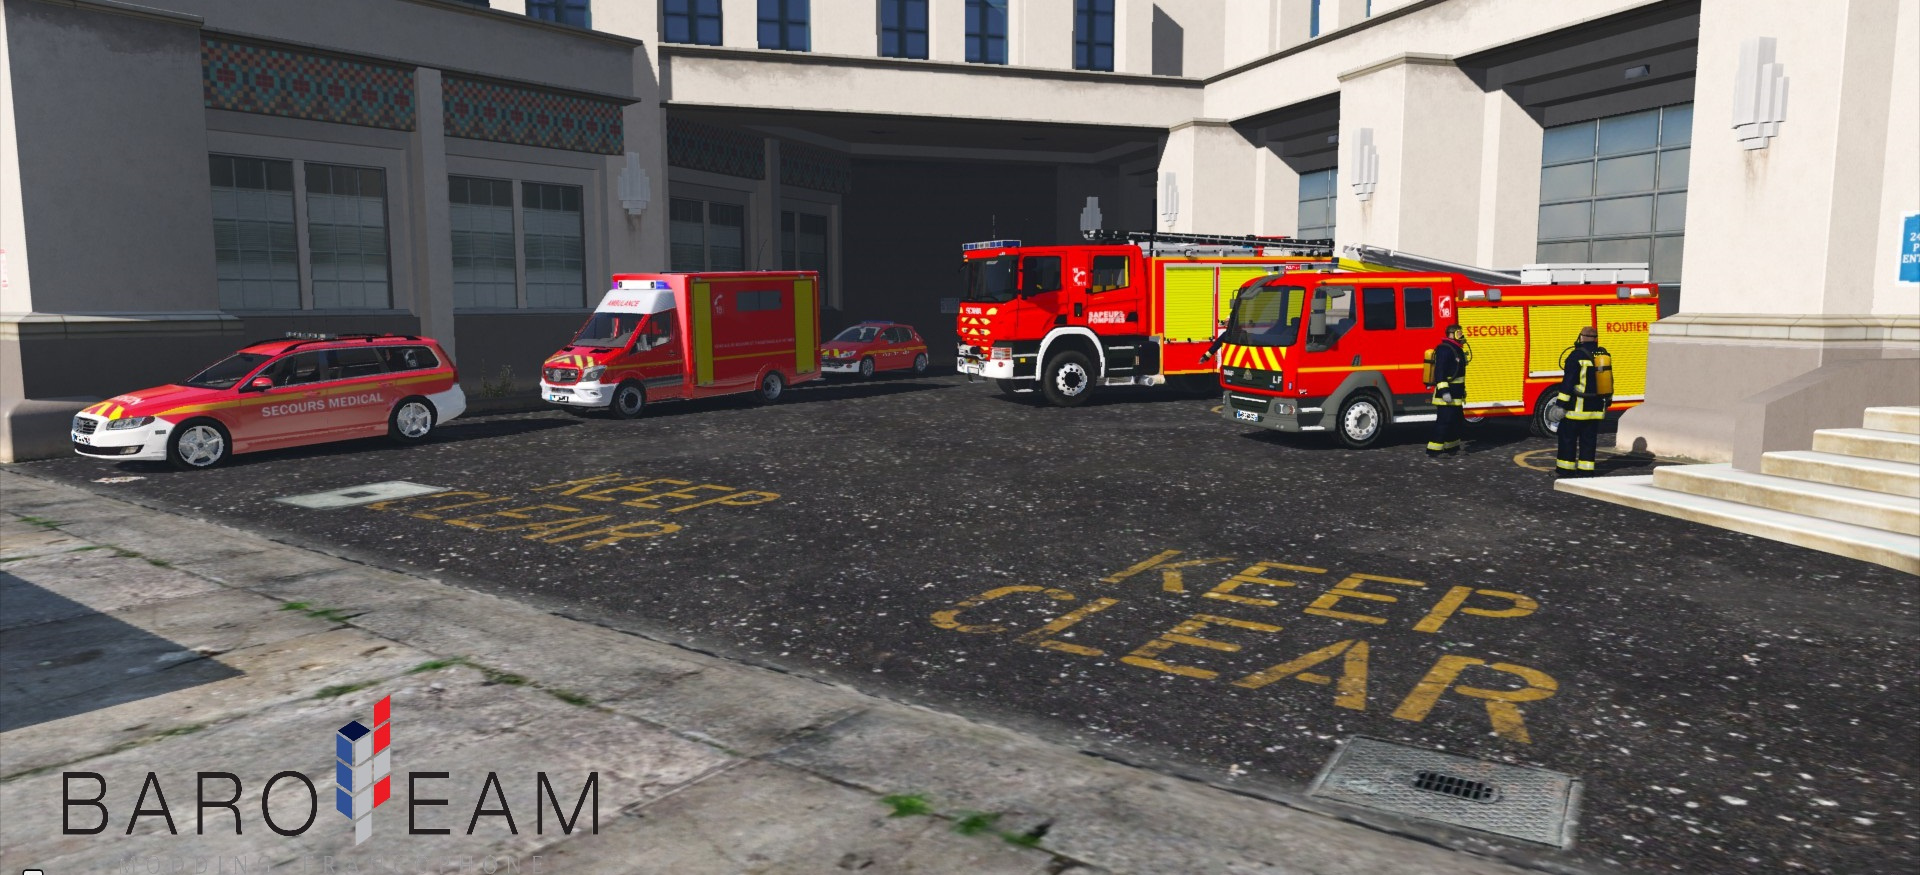 Los Santos Fire Station Caserne De Pompier Gta5 Mods Com